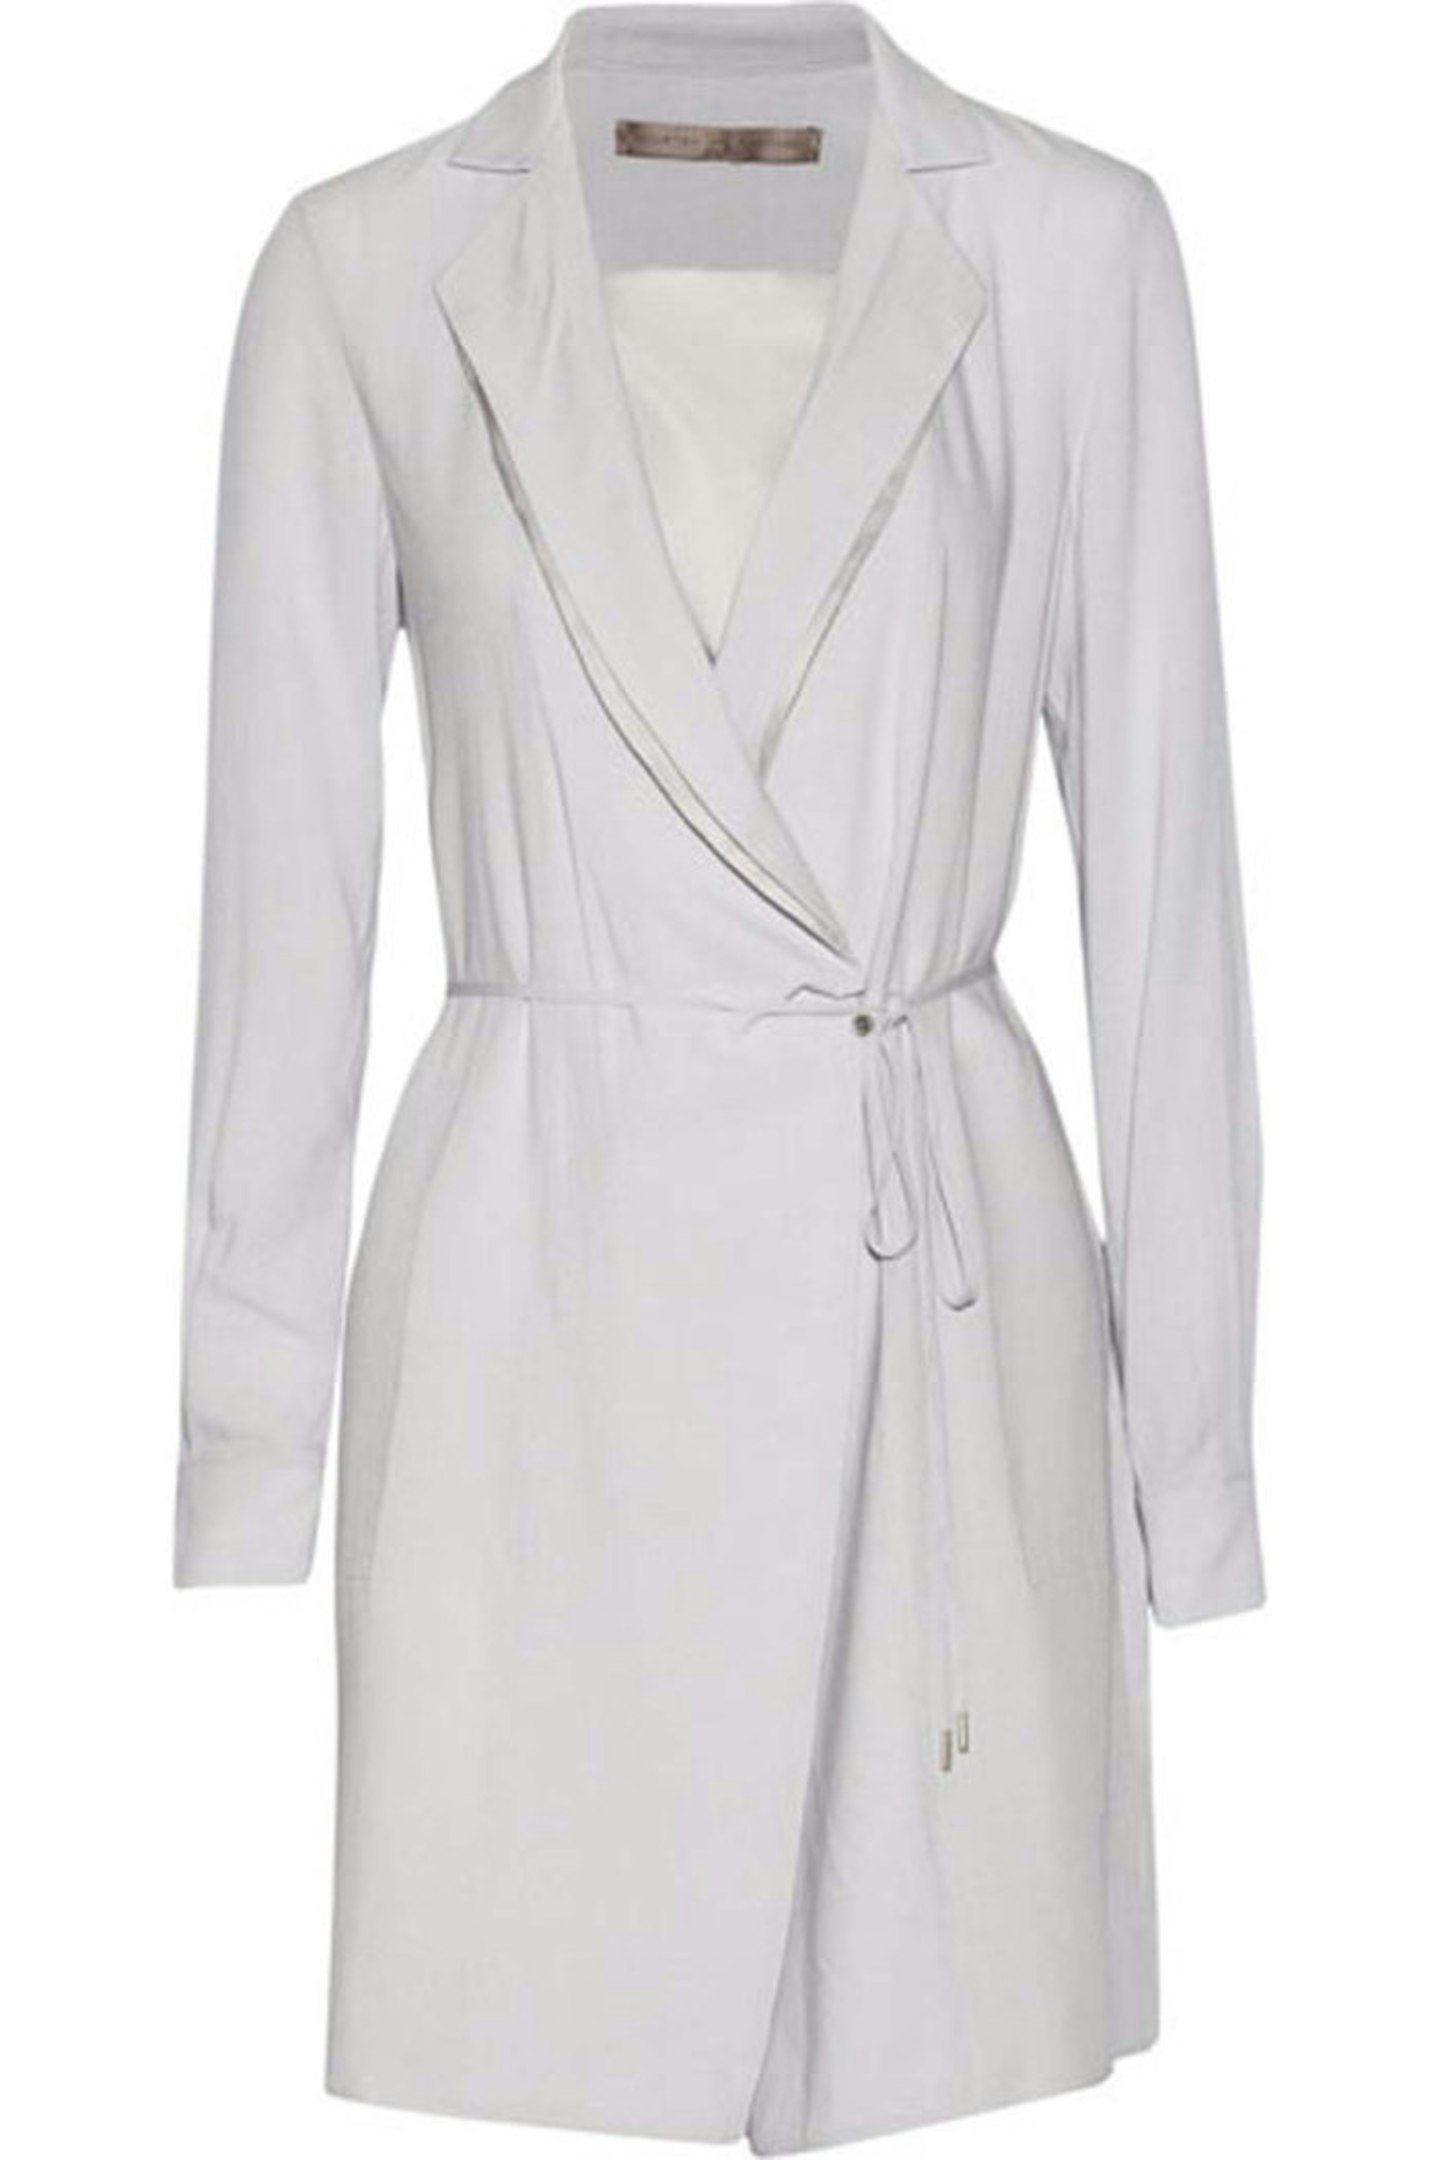 White Voile Wrap Dress, £360, Halston Heritage at Net-a-Porter